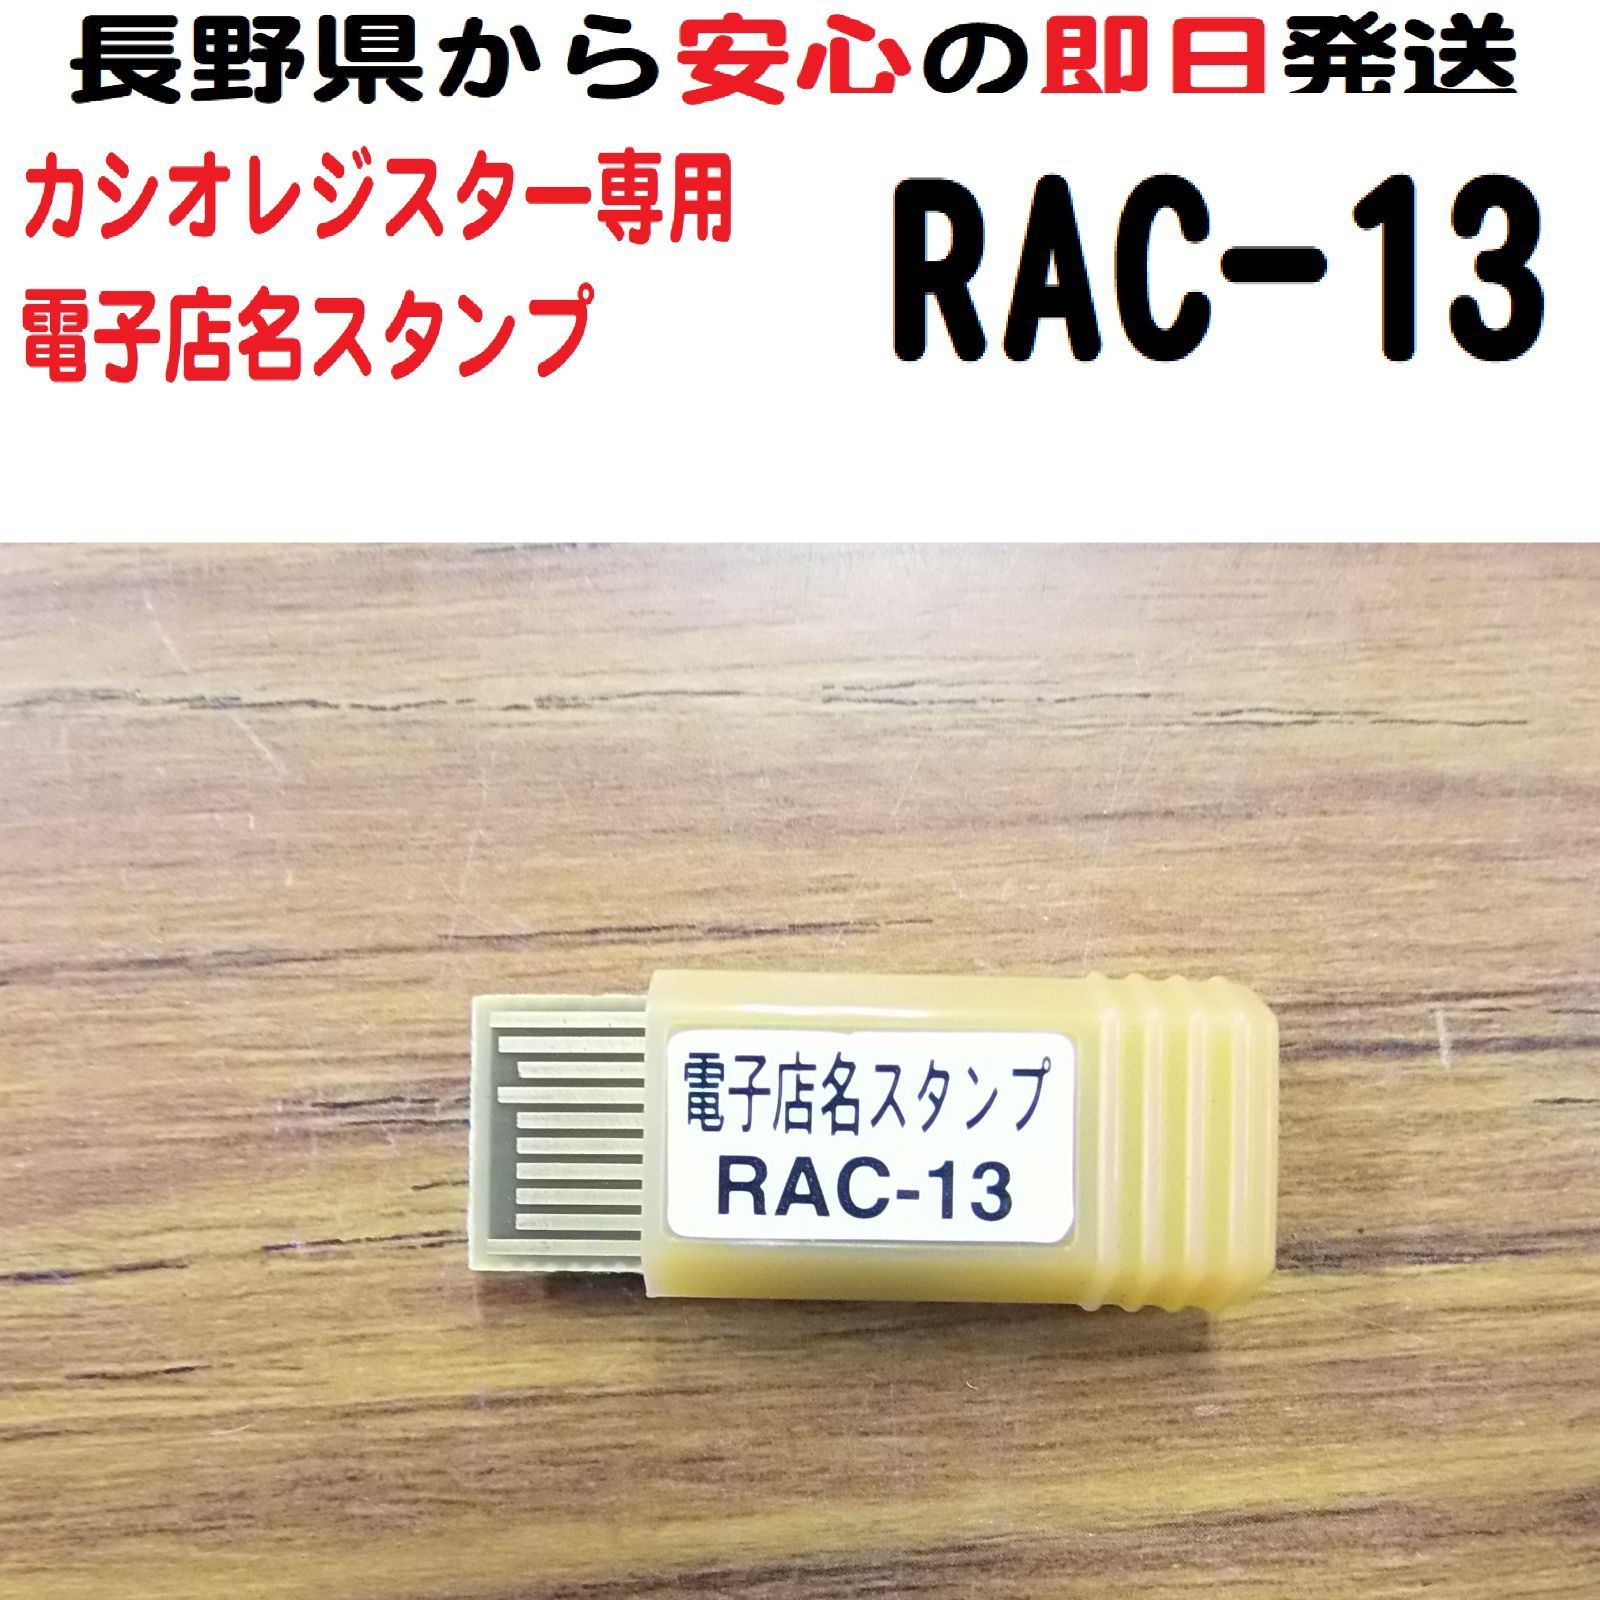 1 RAC-13カシオ レジ 電子 店名スタンプ TE-2500 TE-2300-